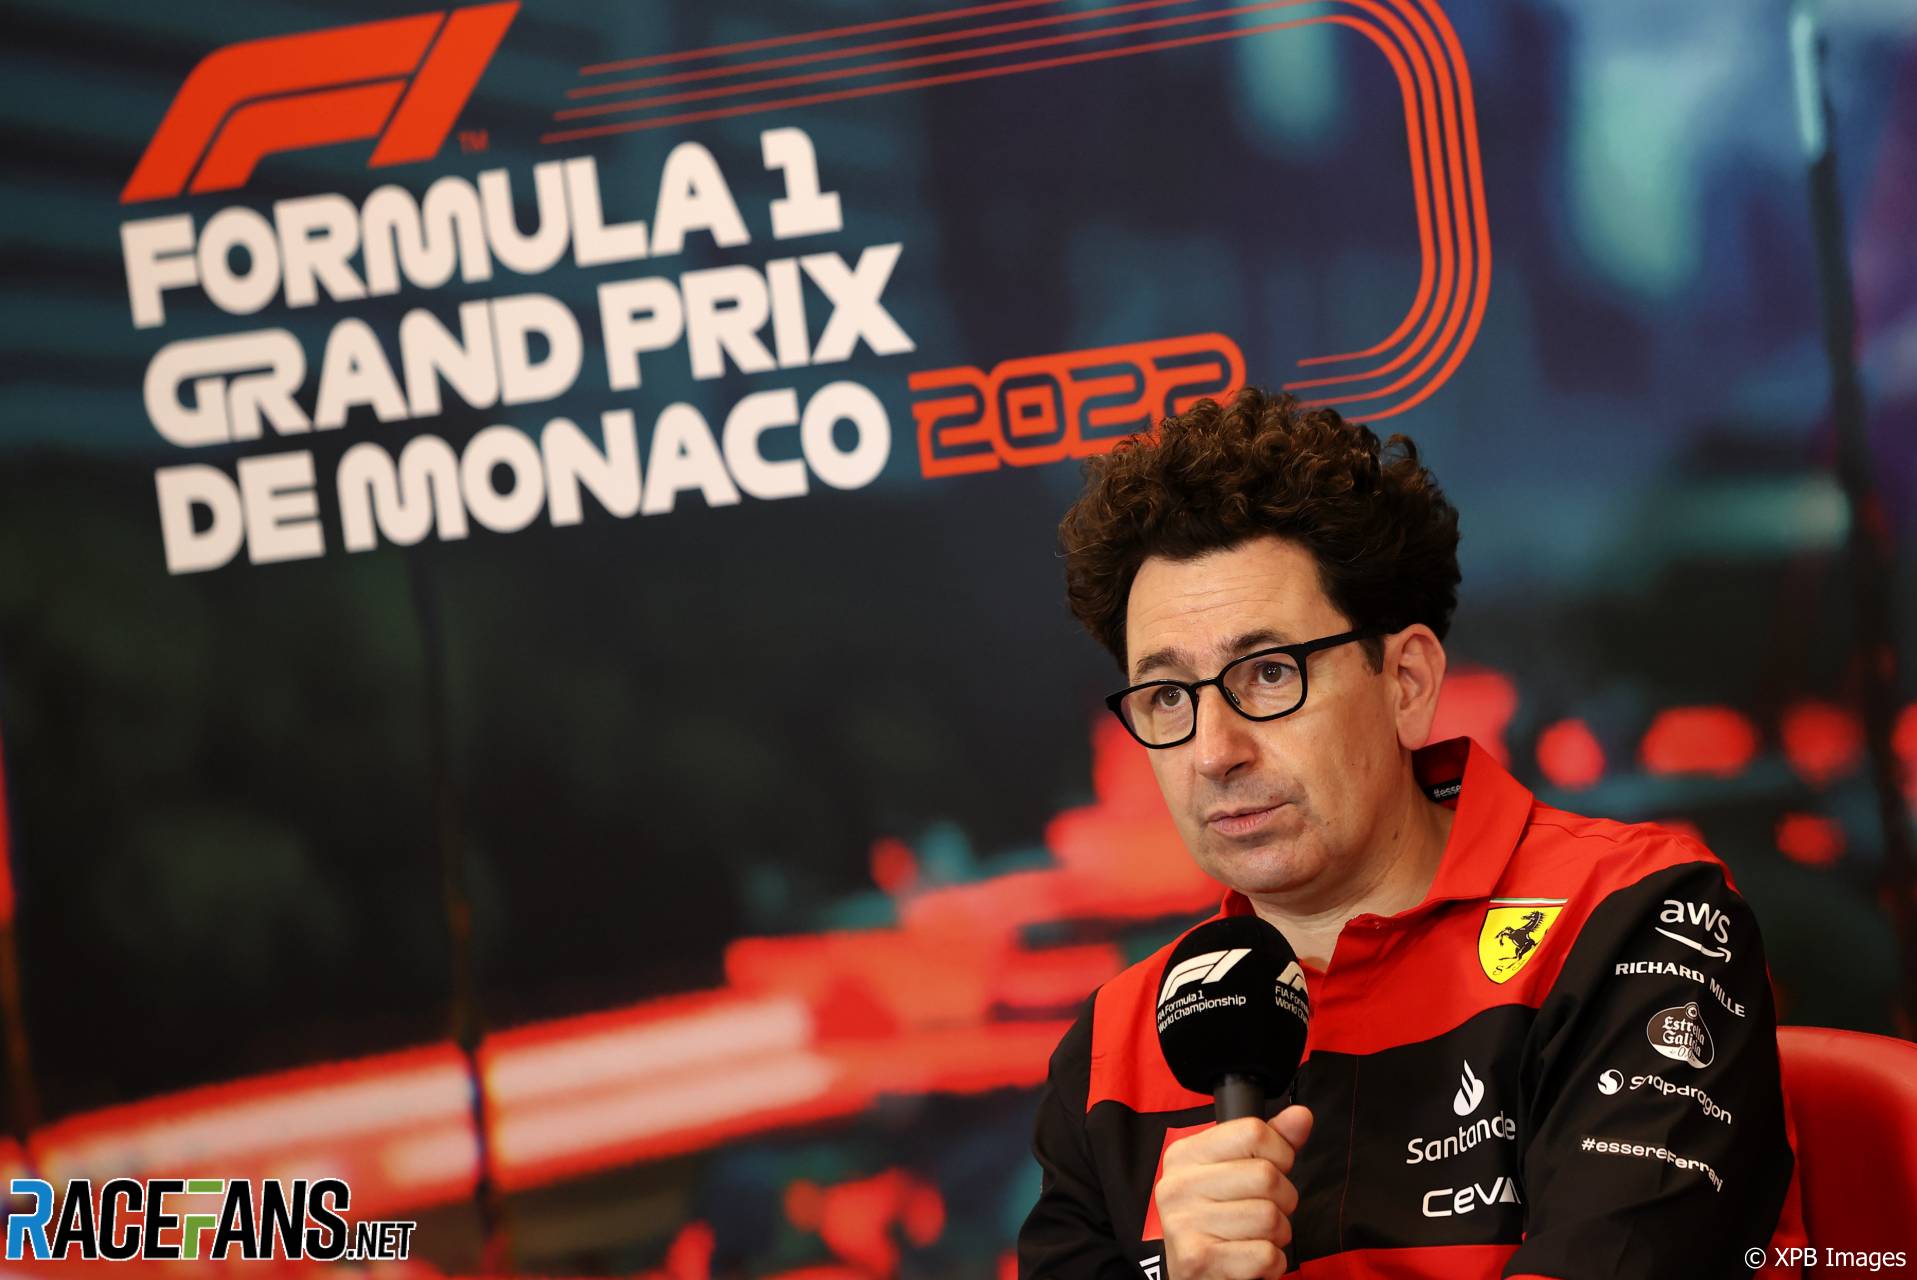 Mattia Binotto, Ferrari Team Principal, Monaco, 2022